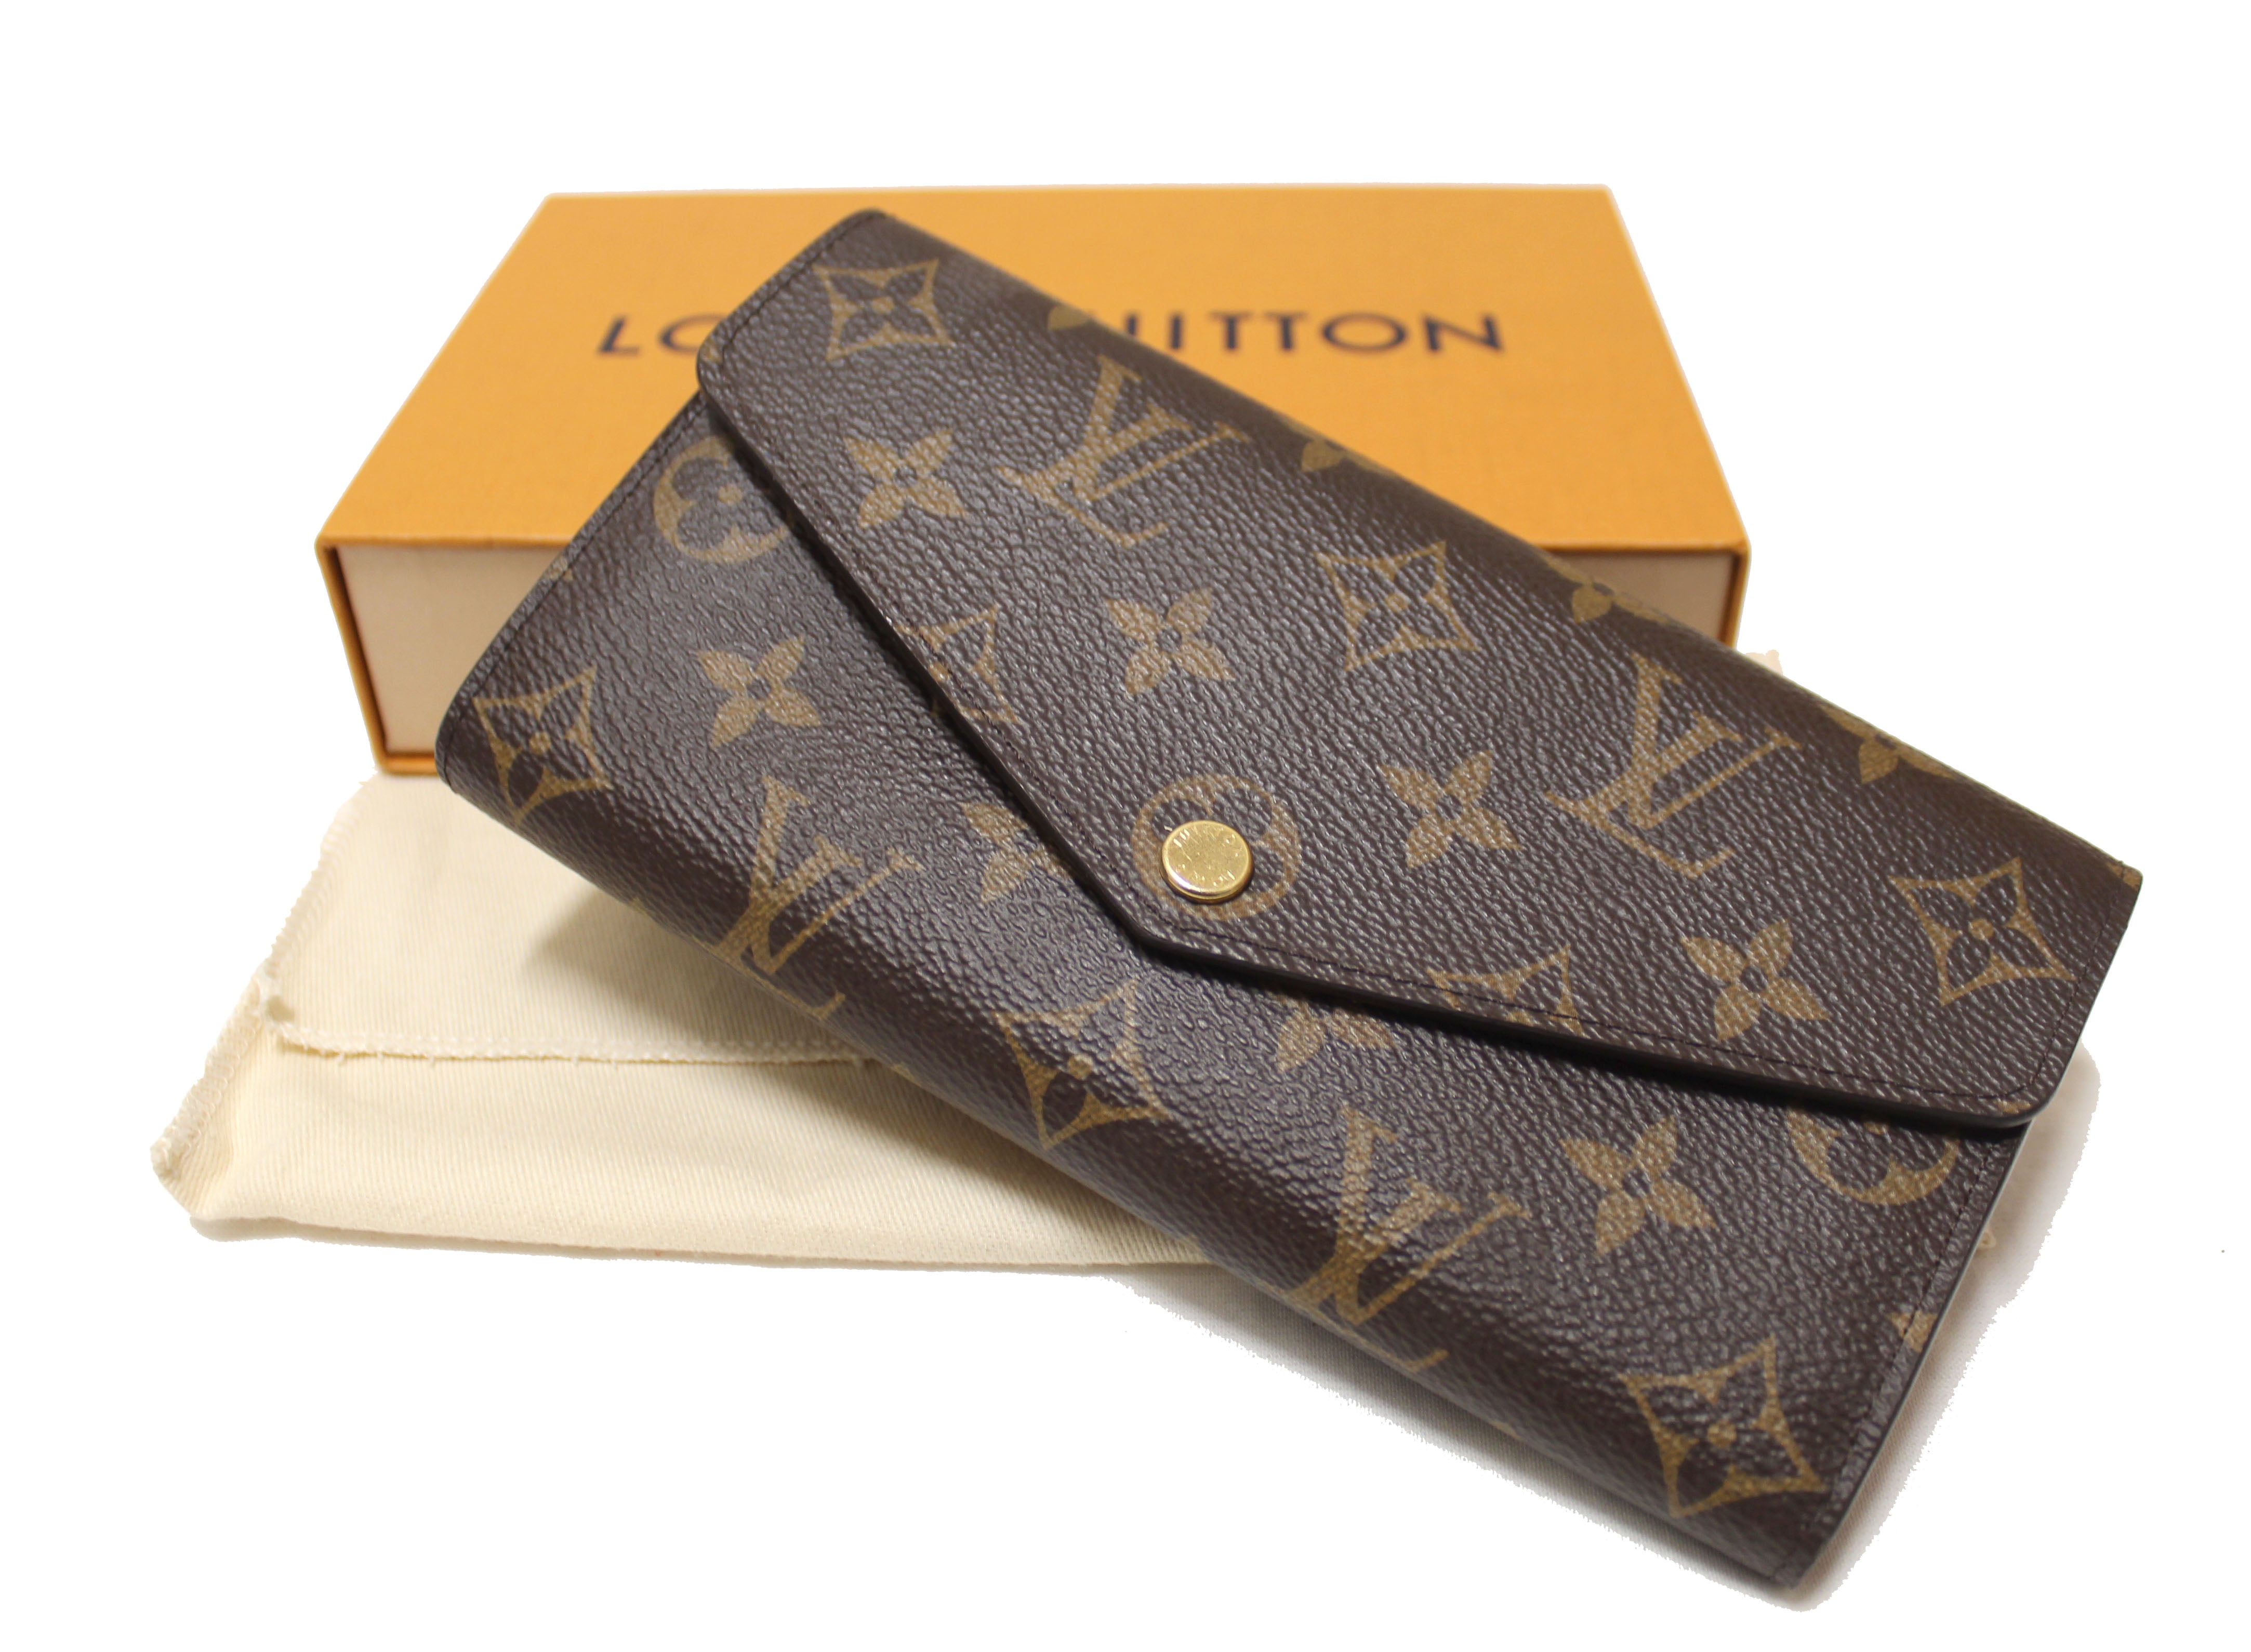 Louis Vuitton Authentic Sarah classic monogram canvas mini bag